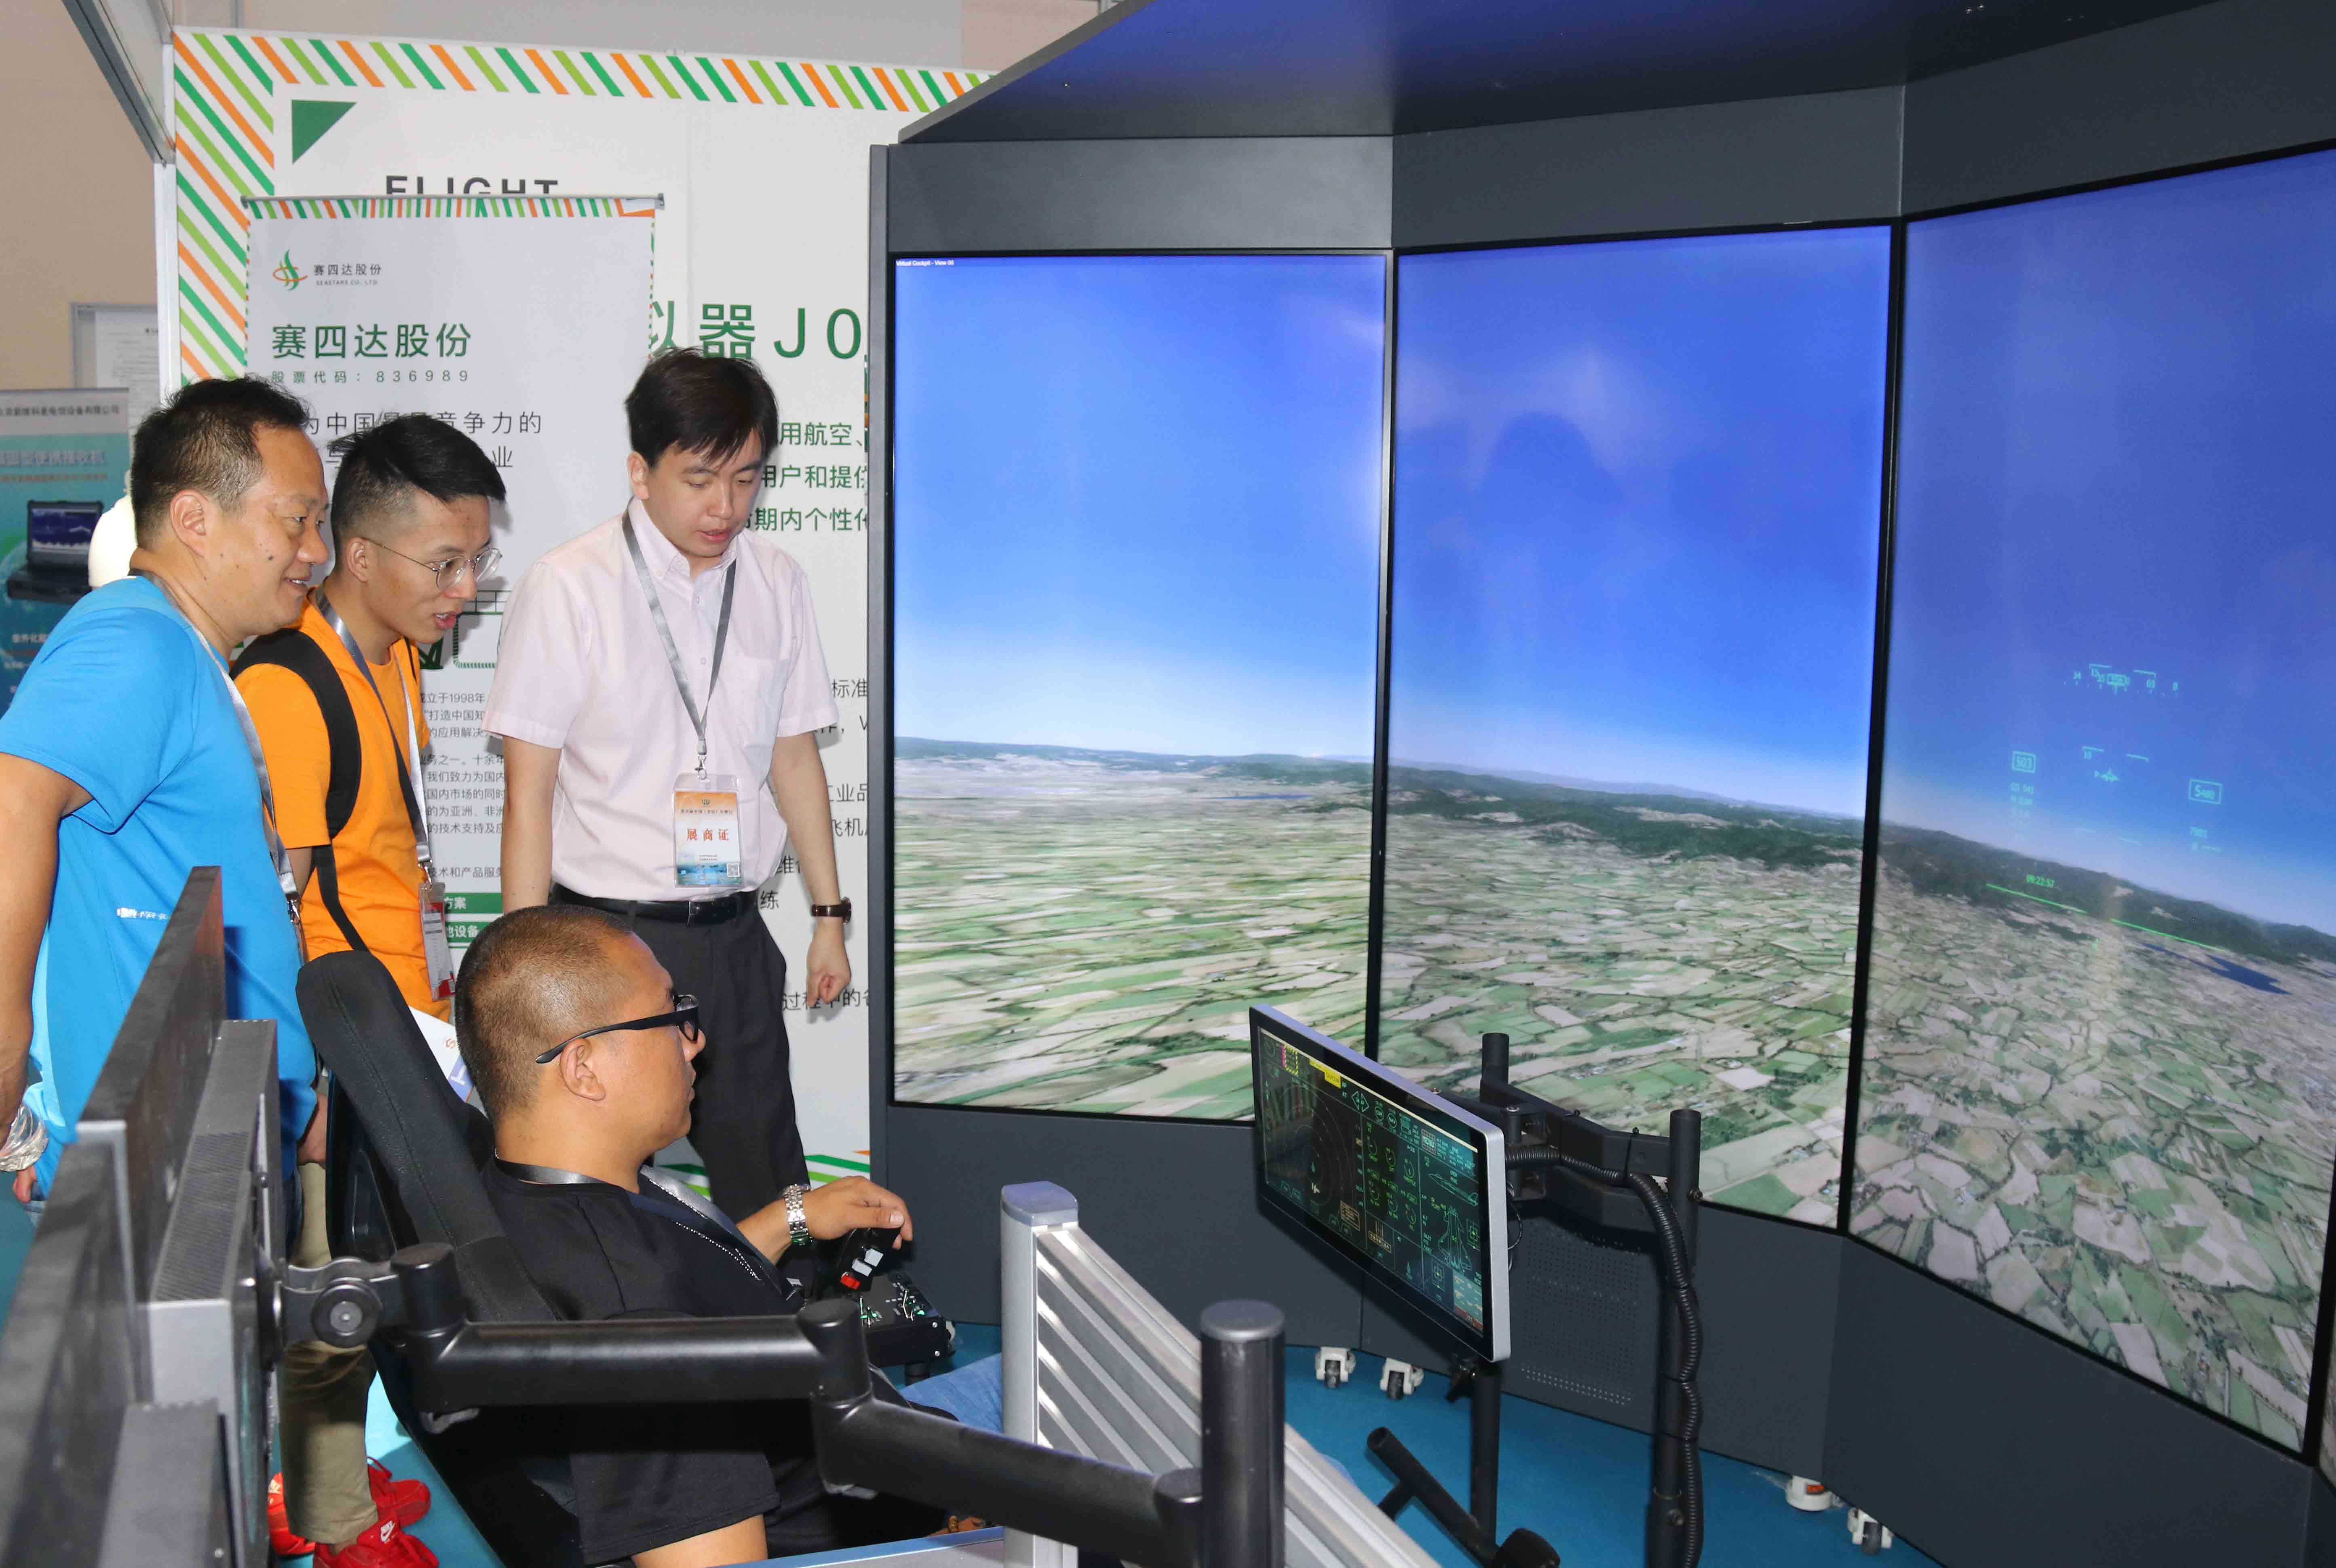 Flight Simulator J01 at the expo